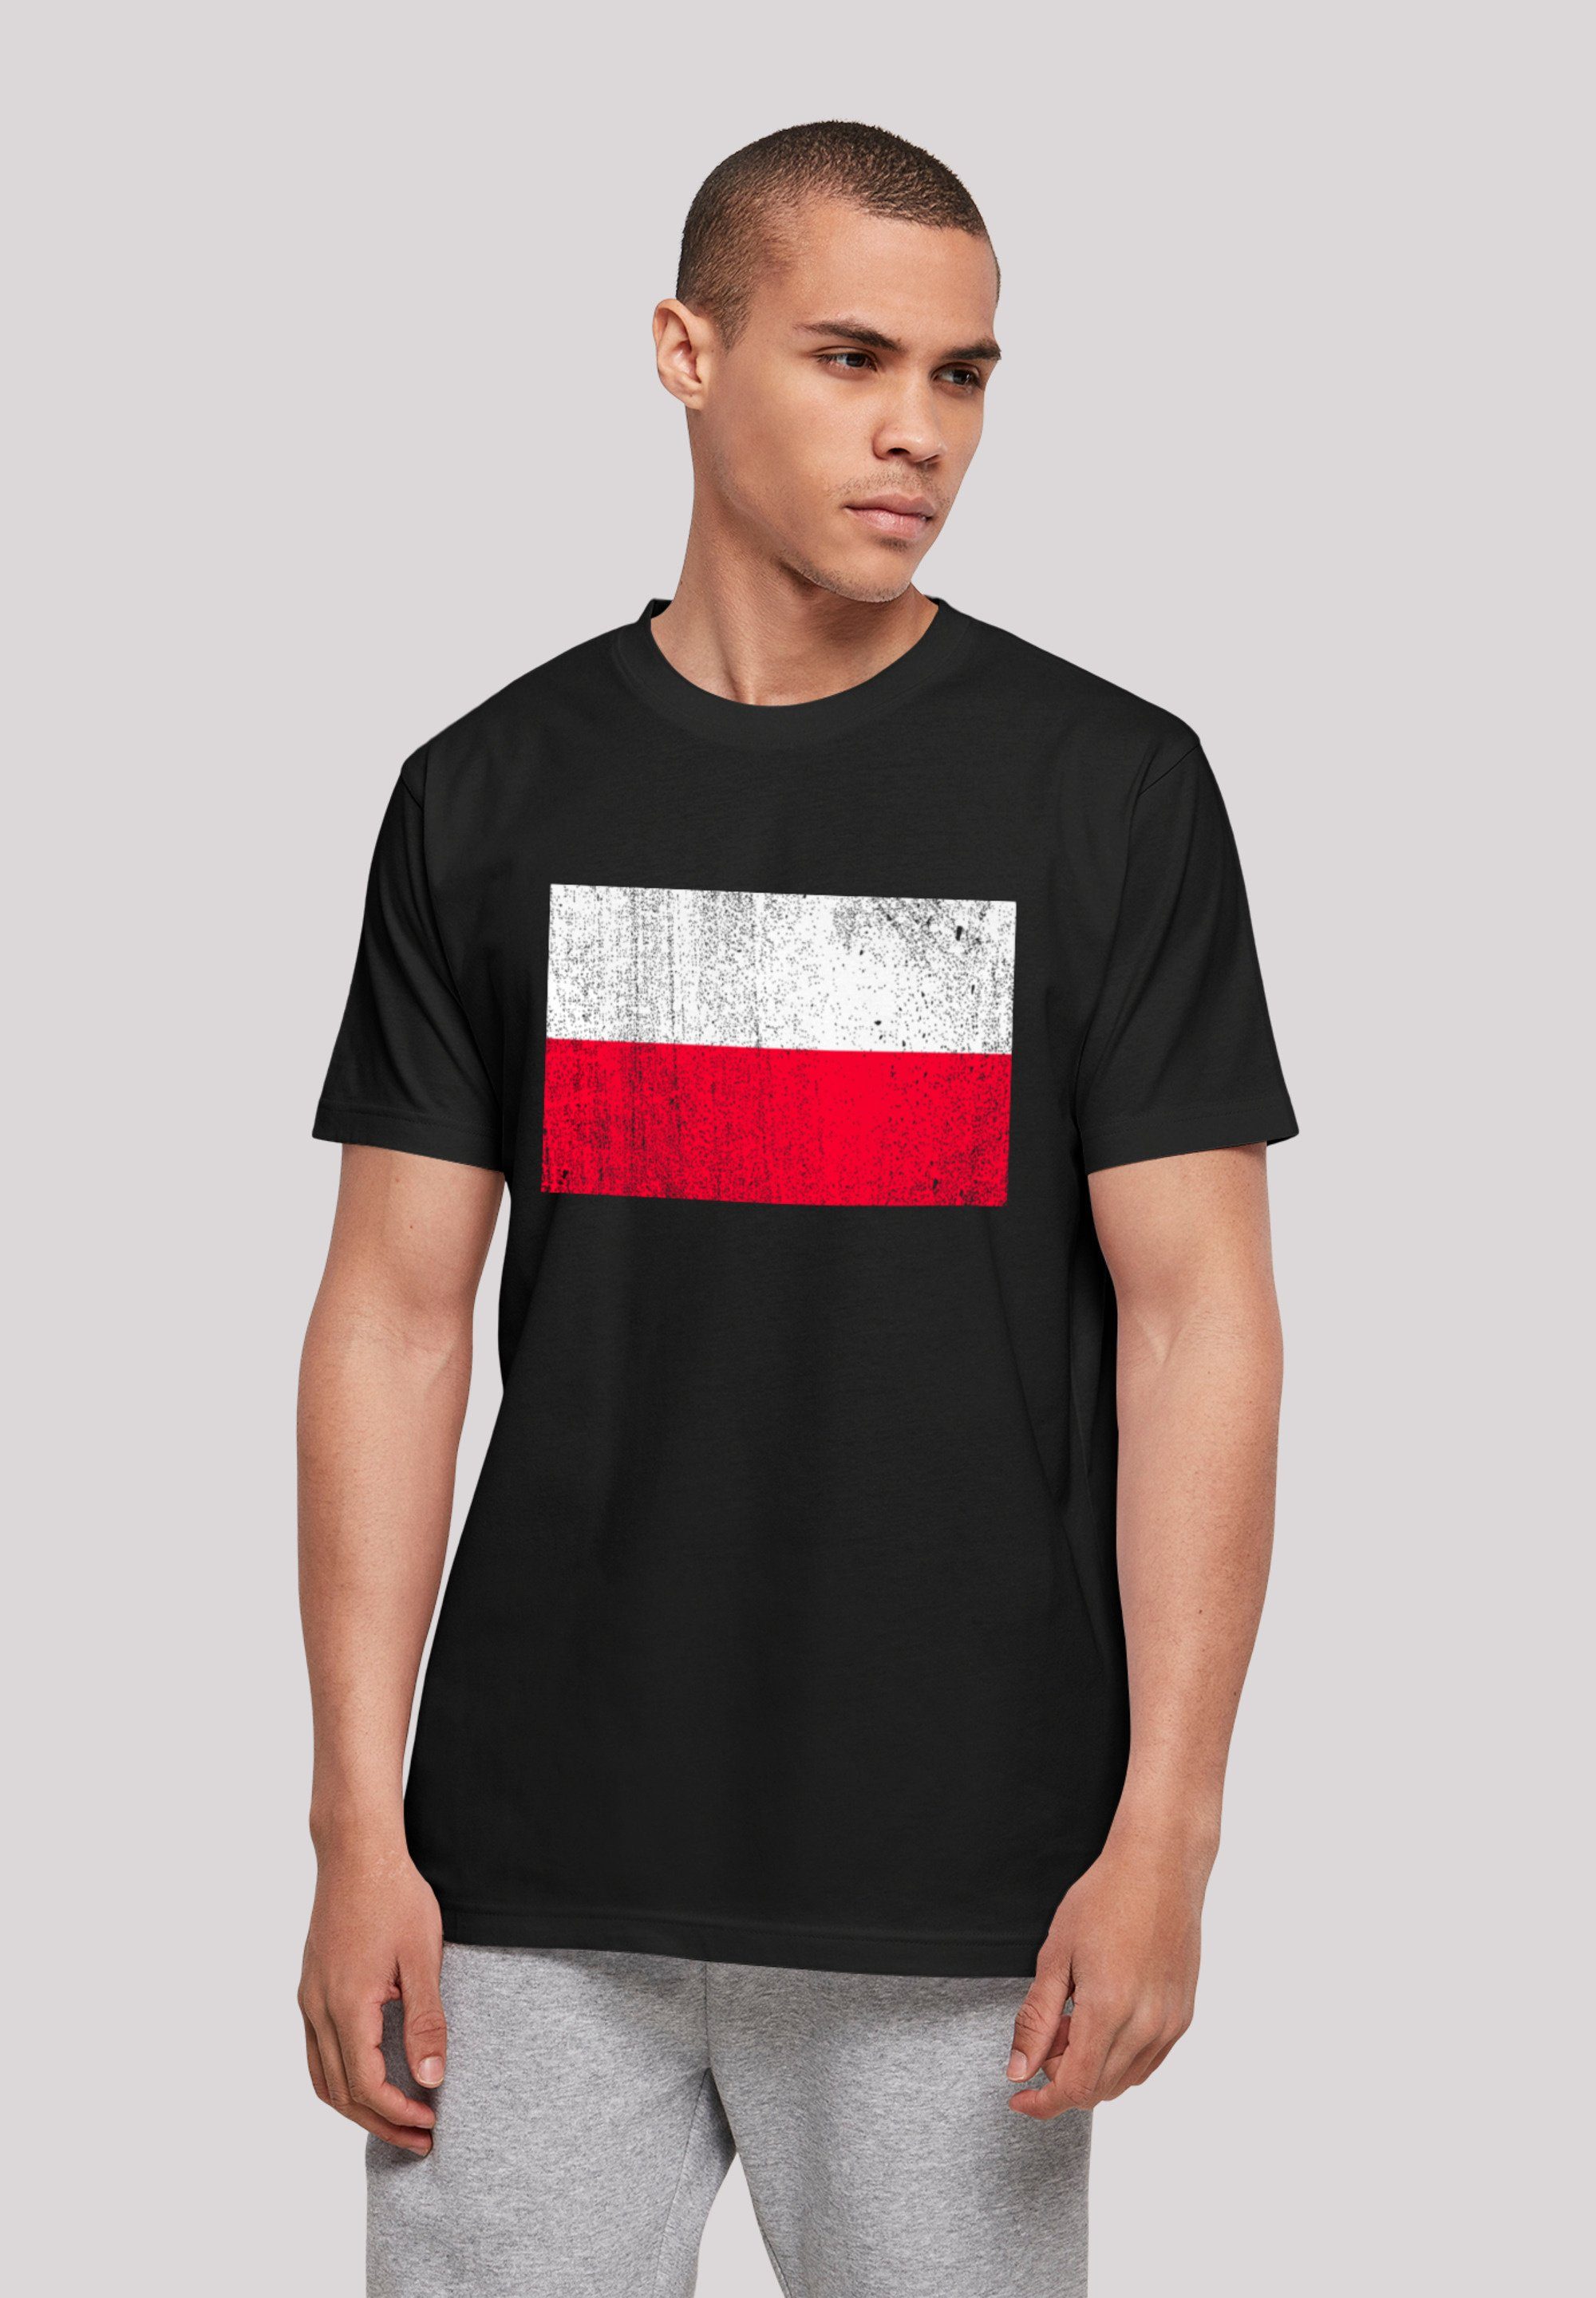 F4NT4STIC T-Shirt Print schwarz Flagge Poland Polen distressed